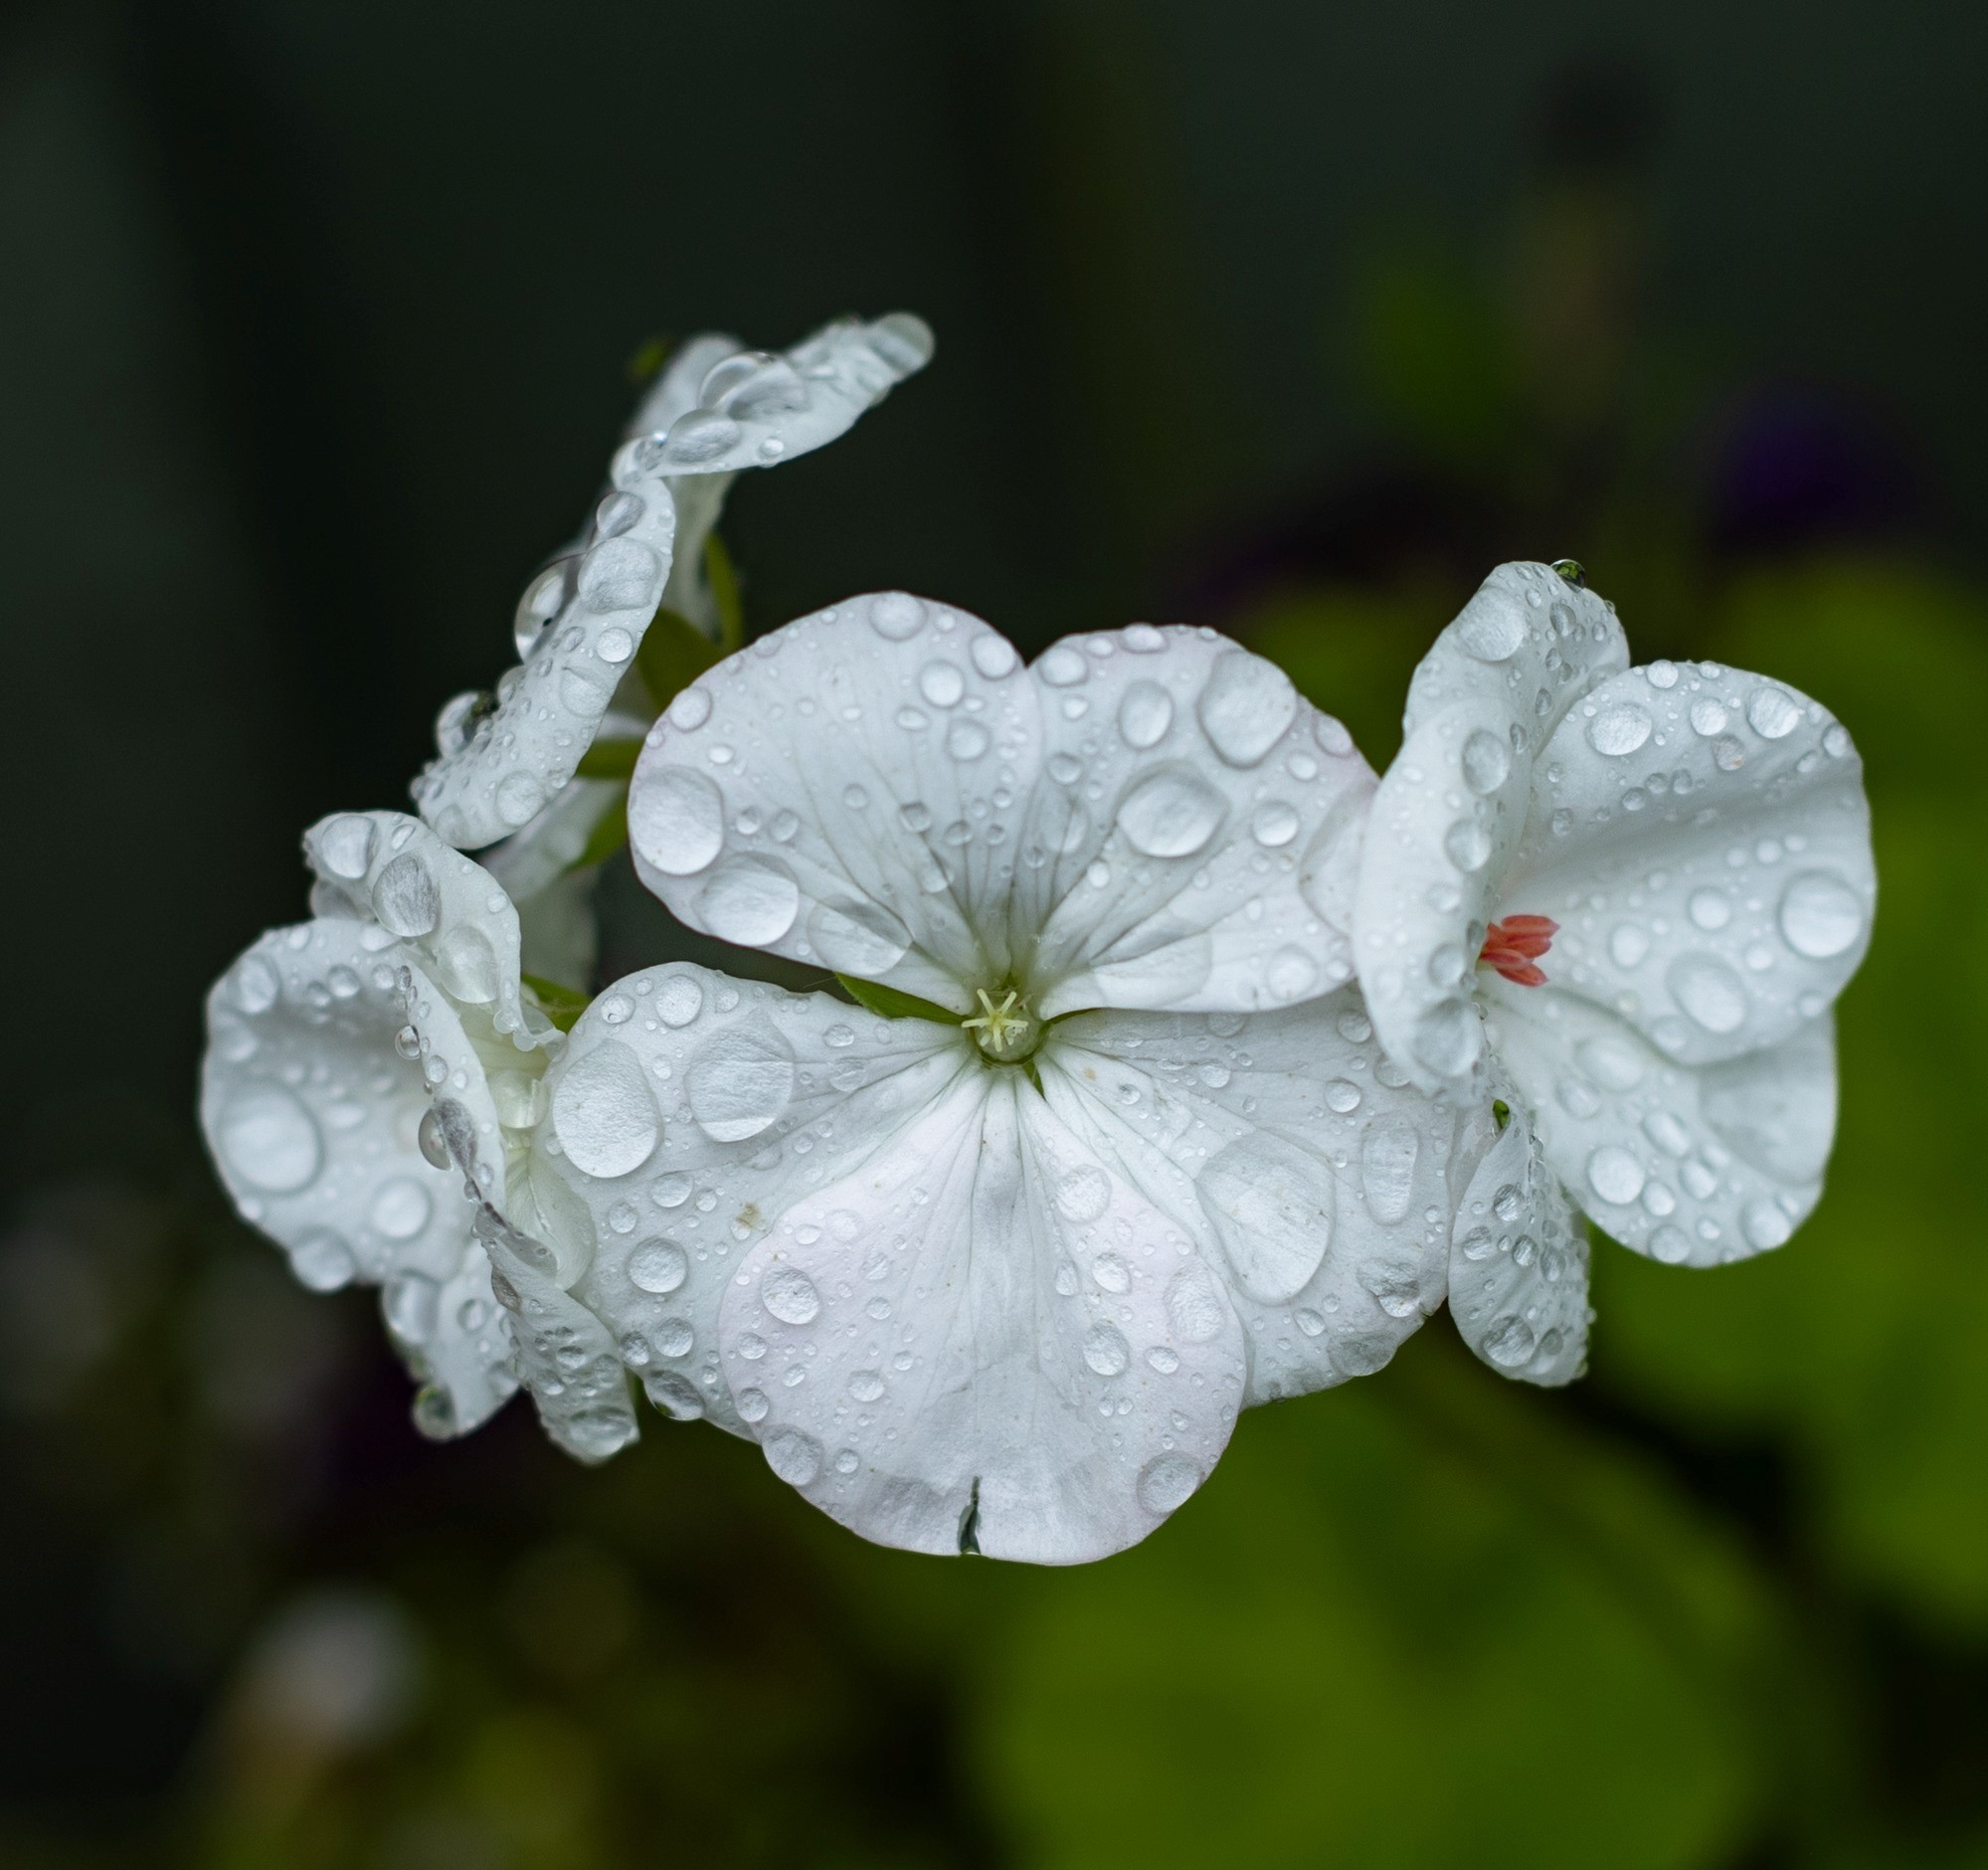 Raindrops on geranium by Dave Parry